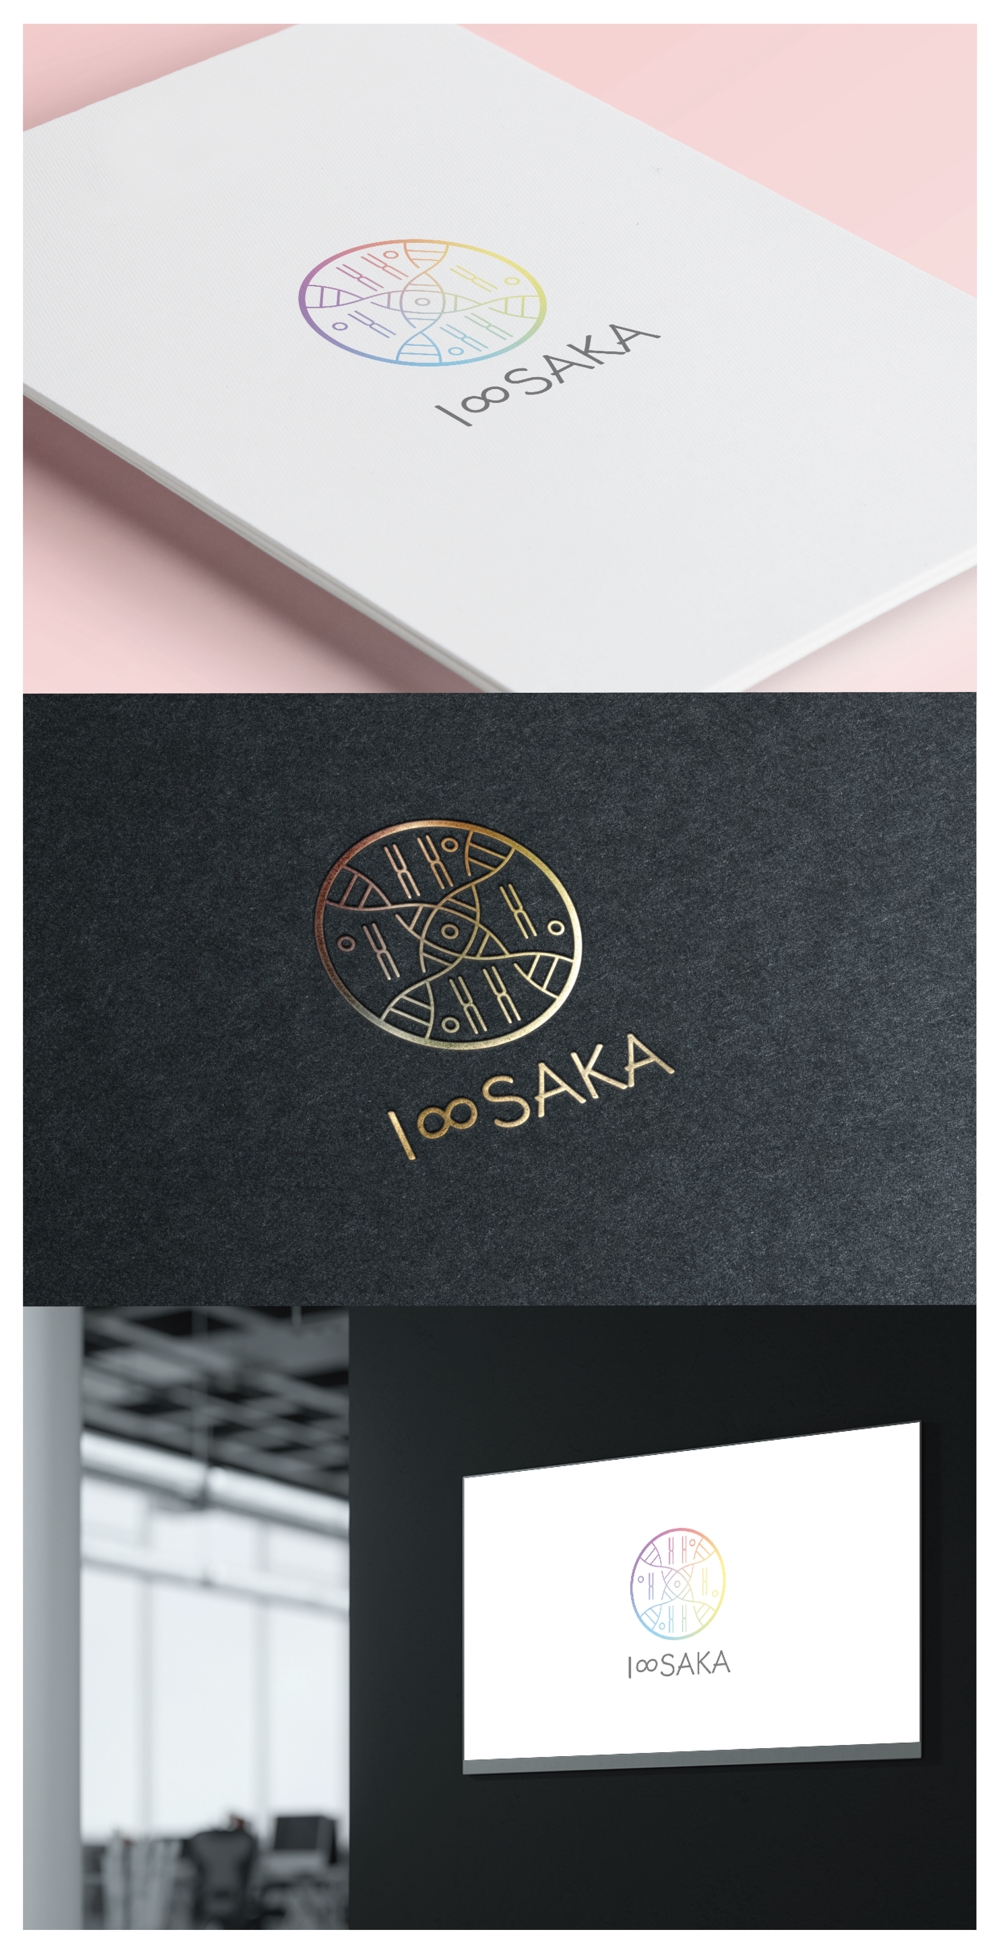 I∞SAKA_logo02_01.jpg